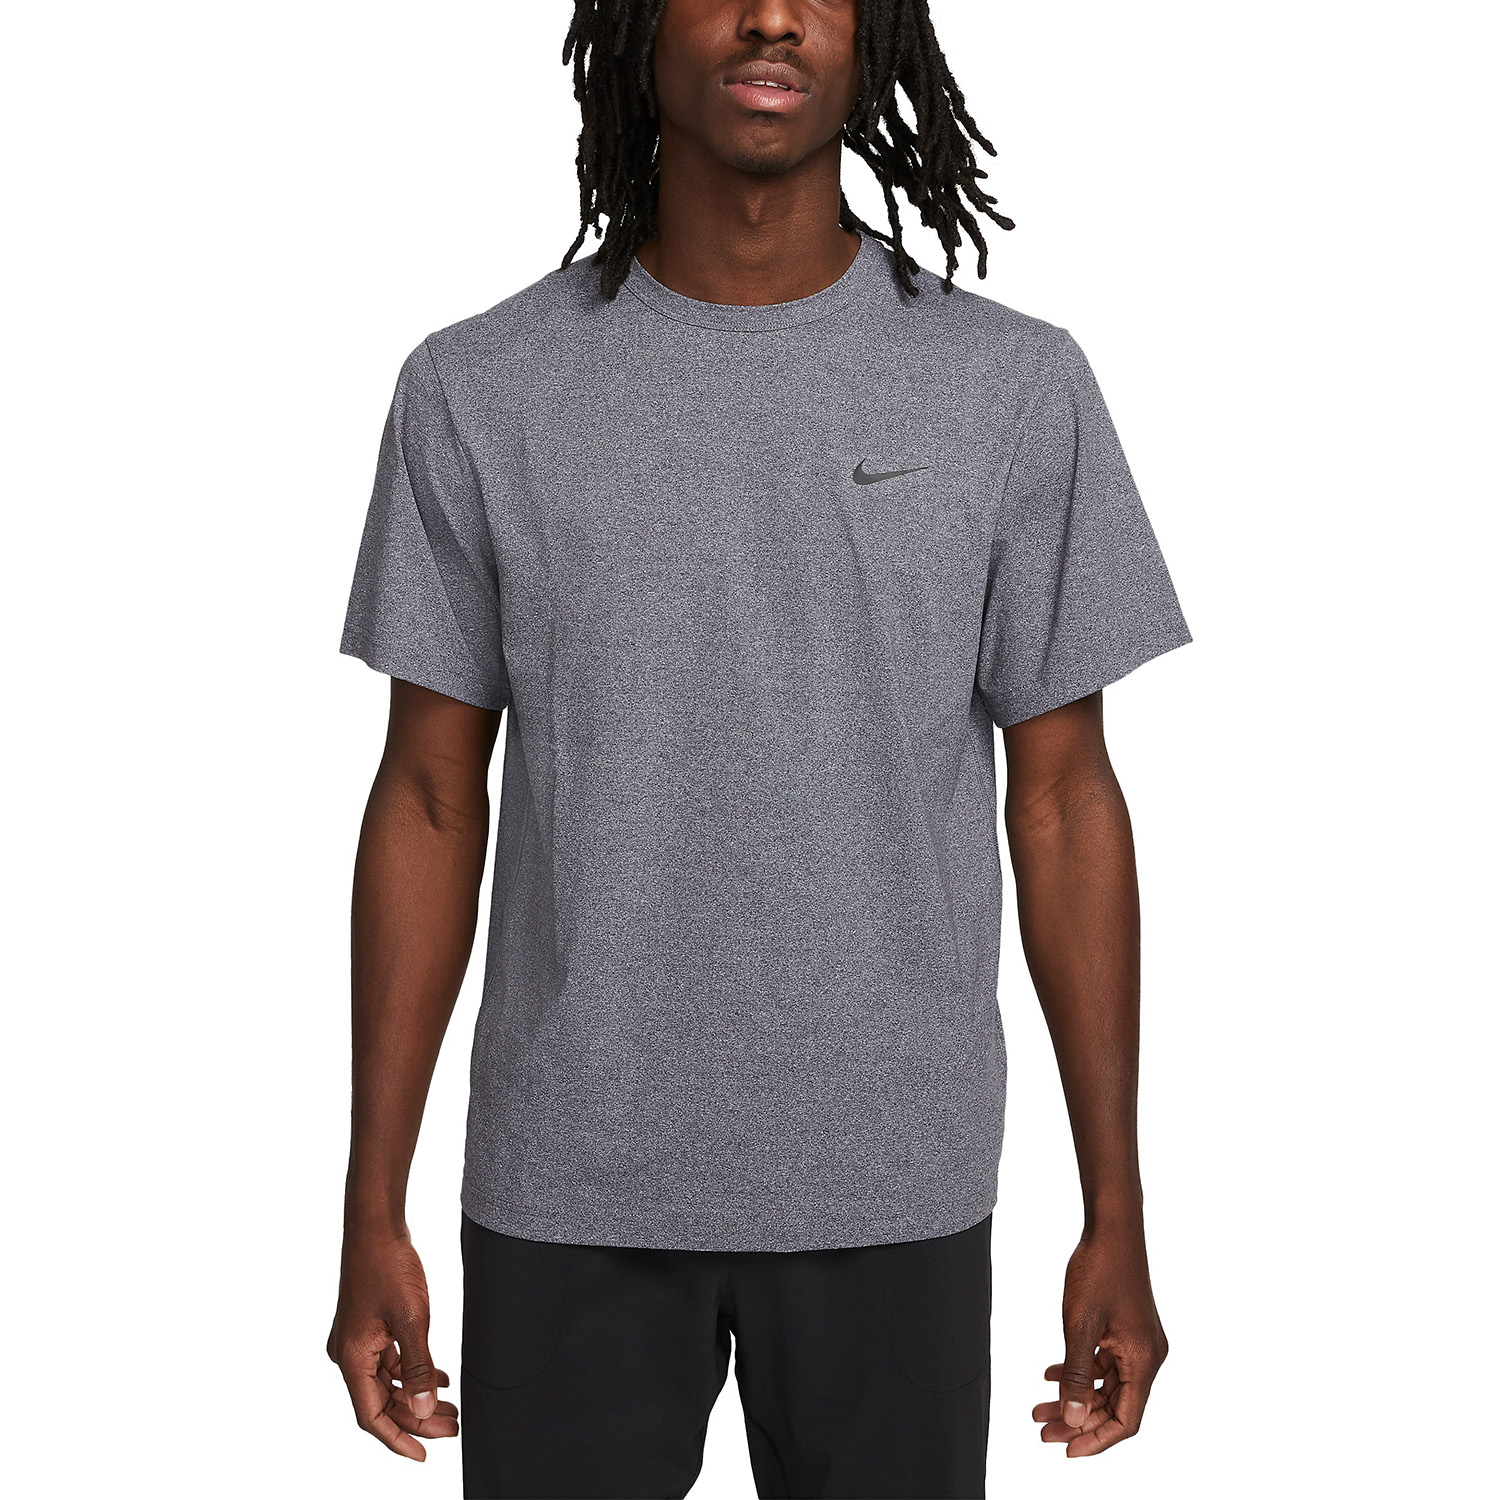 Nike Dri-FIT Hyverse Camiseta - Obsidian/Heater/Black